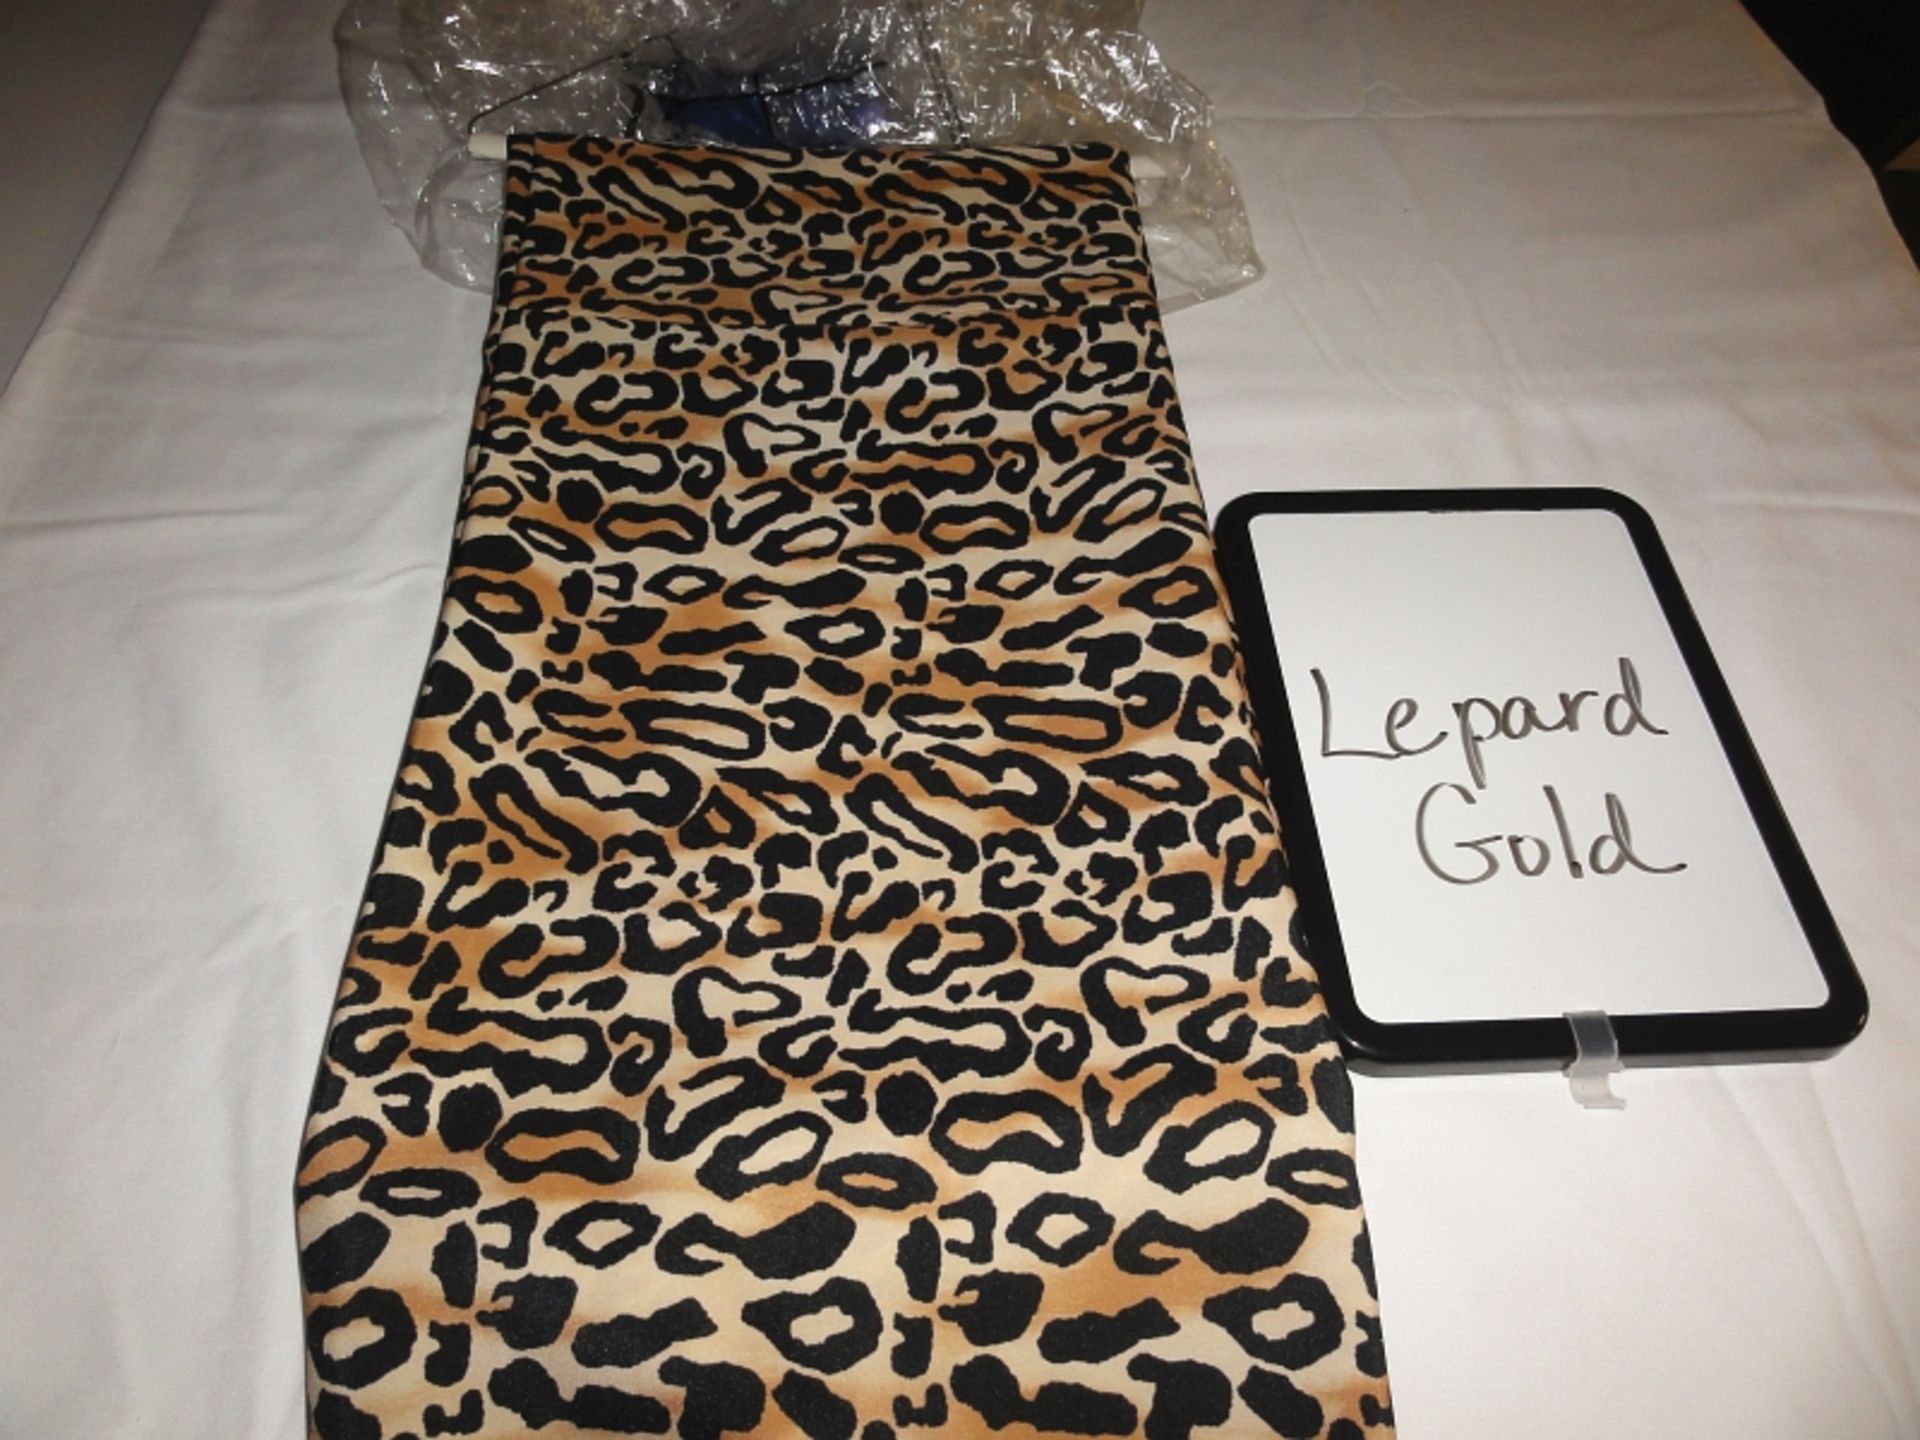 LINEN, LEOPARD GOLD, Various Sizes including: